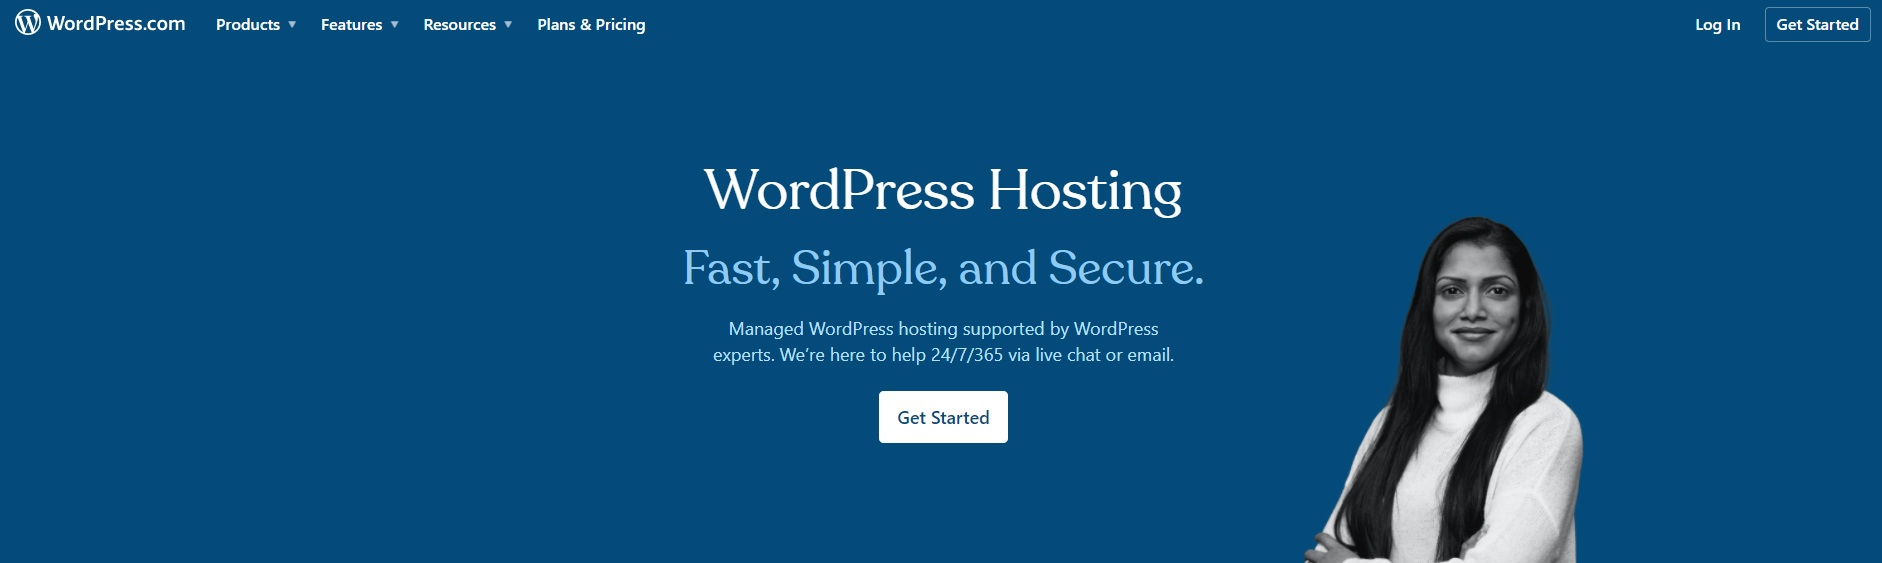 WordPress_Introduction